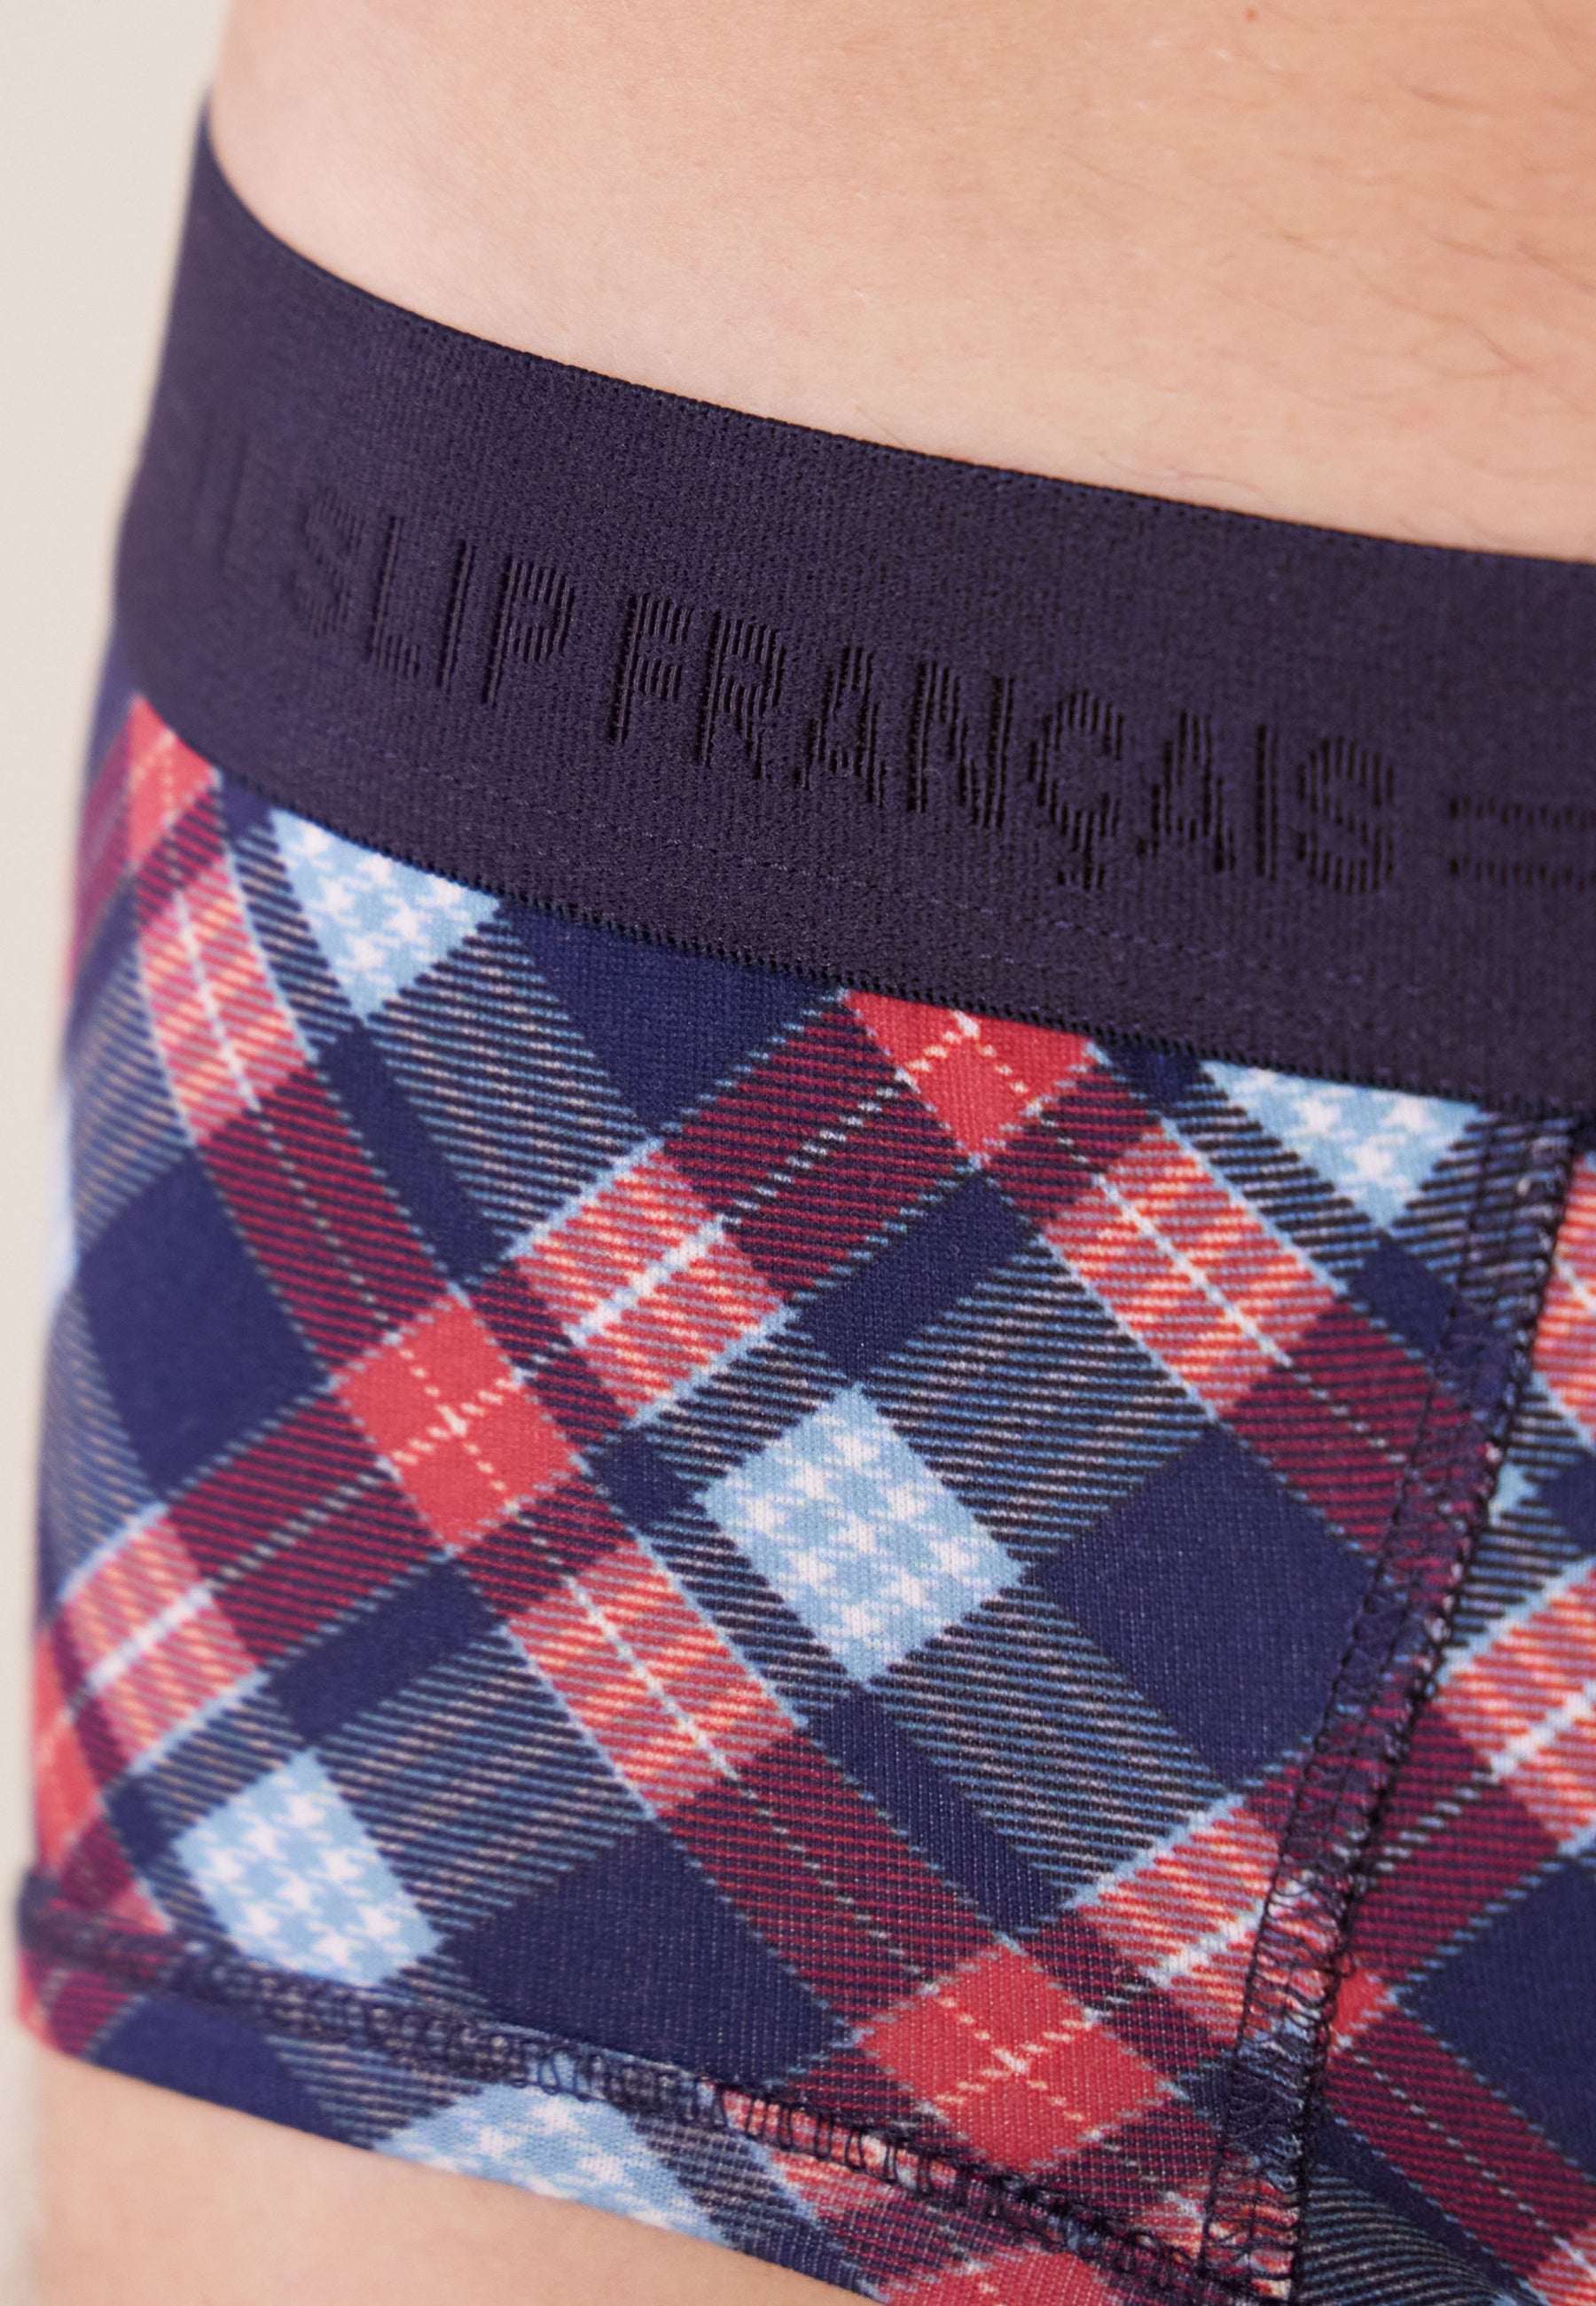 Men's Briefs Made In France - Le slip français 🇫🇷